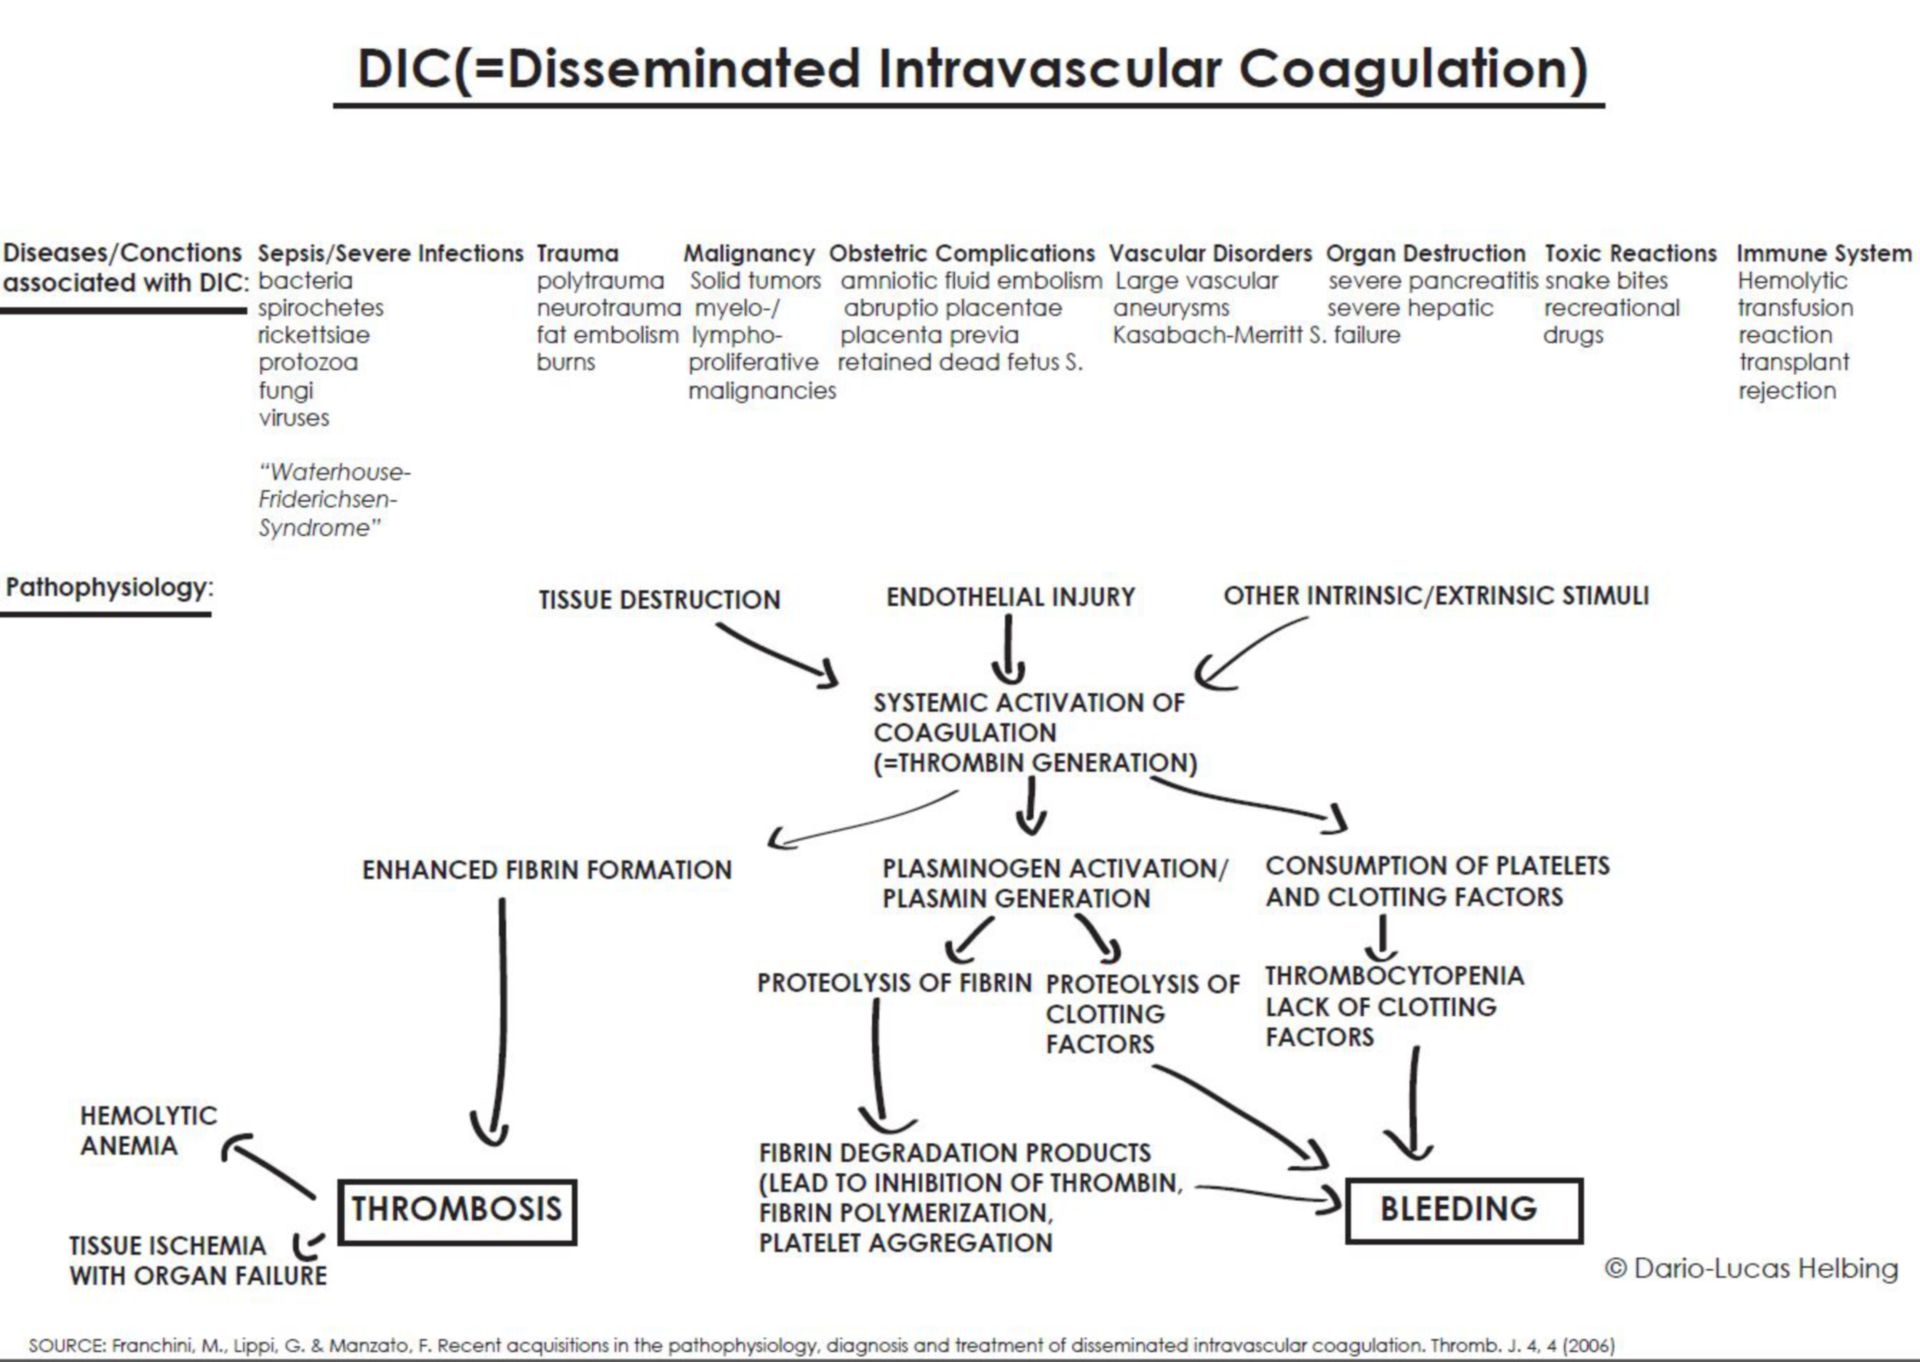 DIC - Disseminated intravascular Coagulation